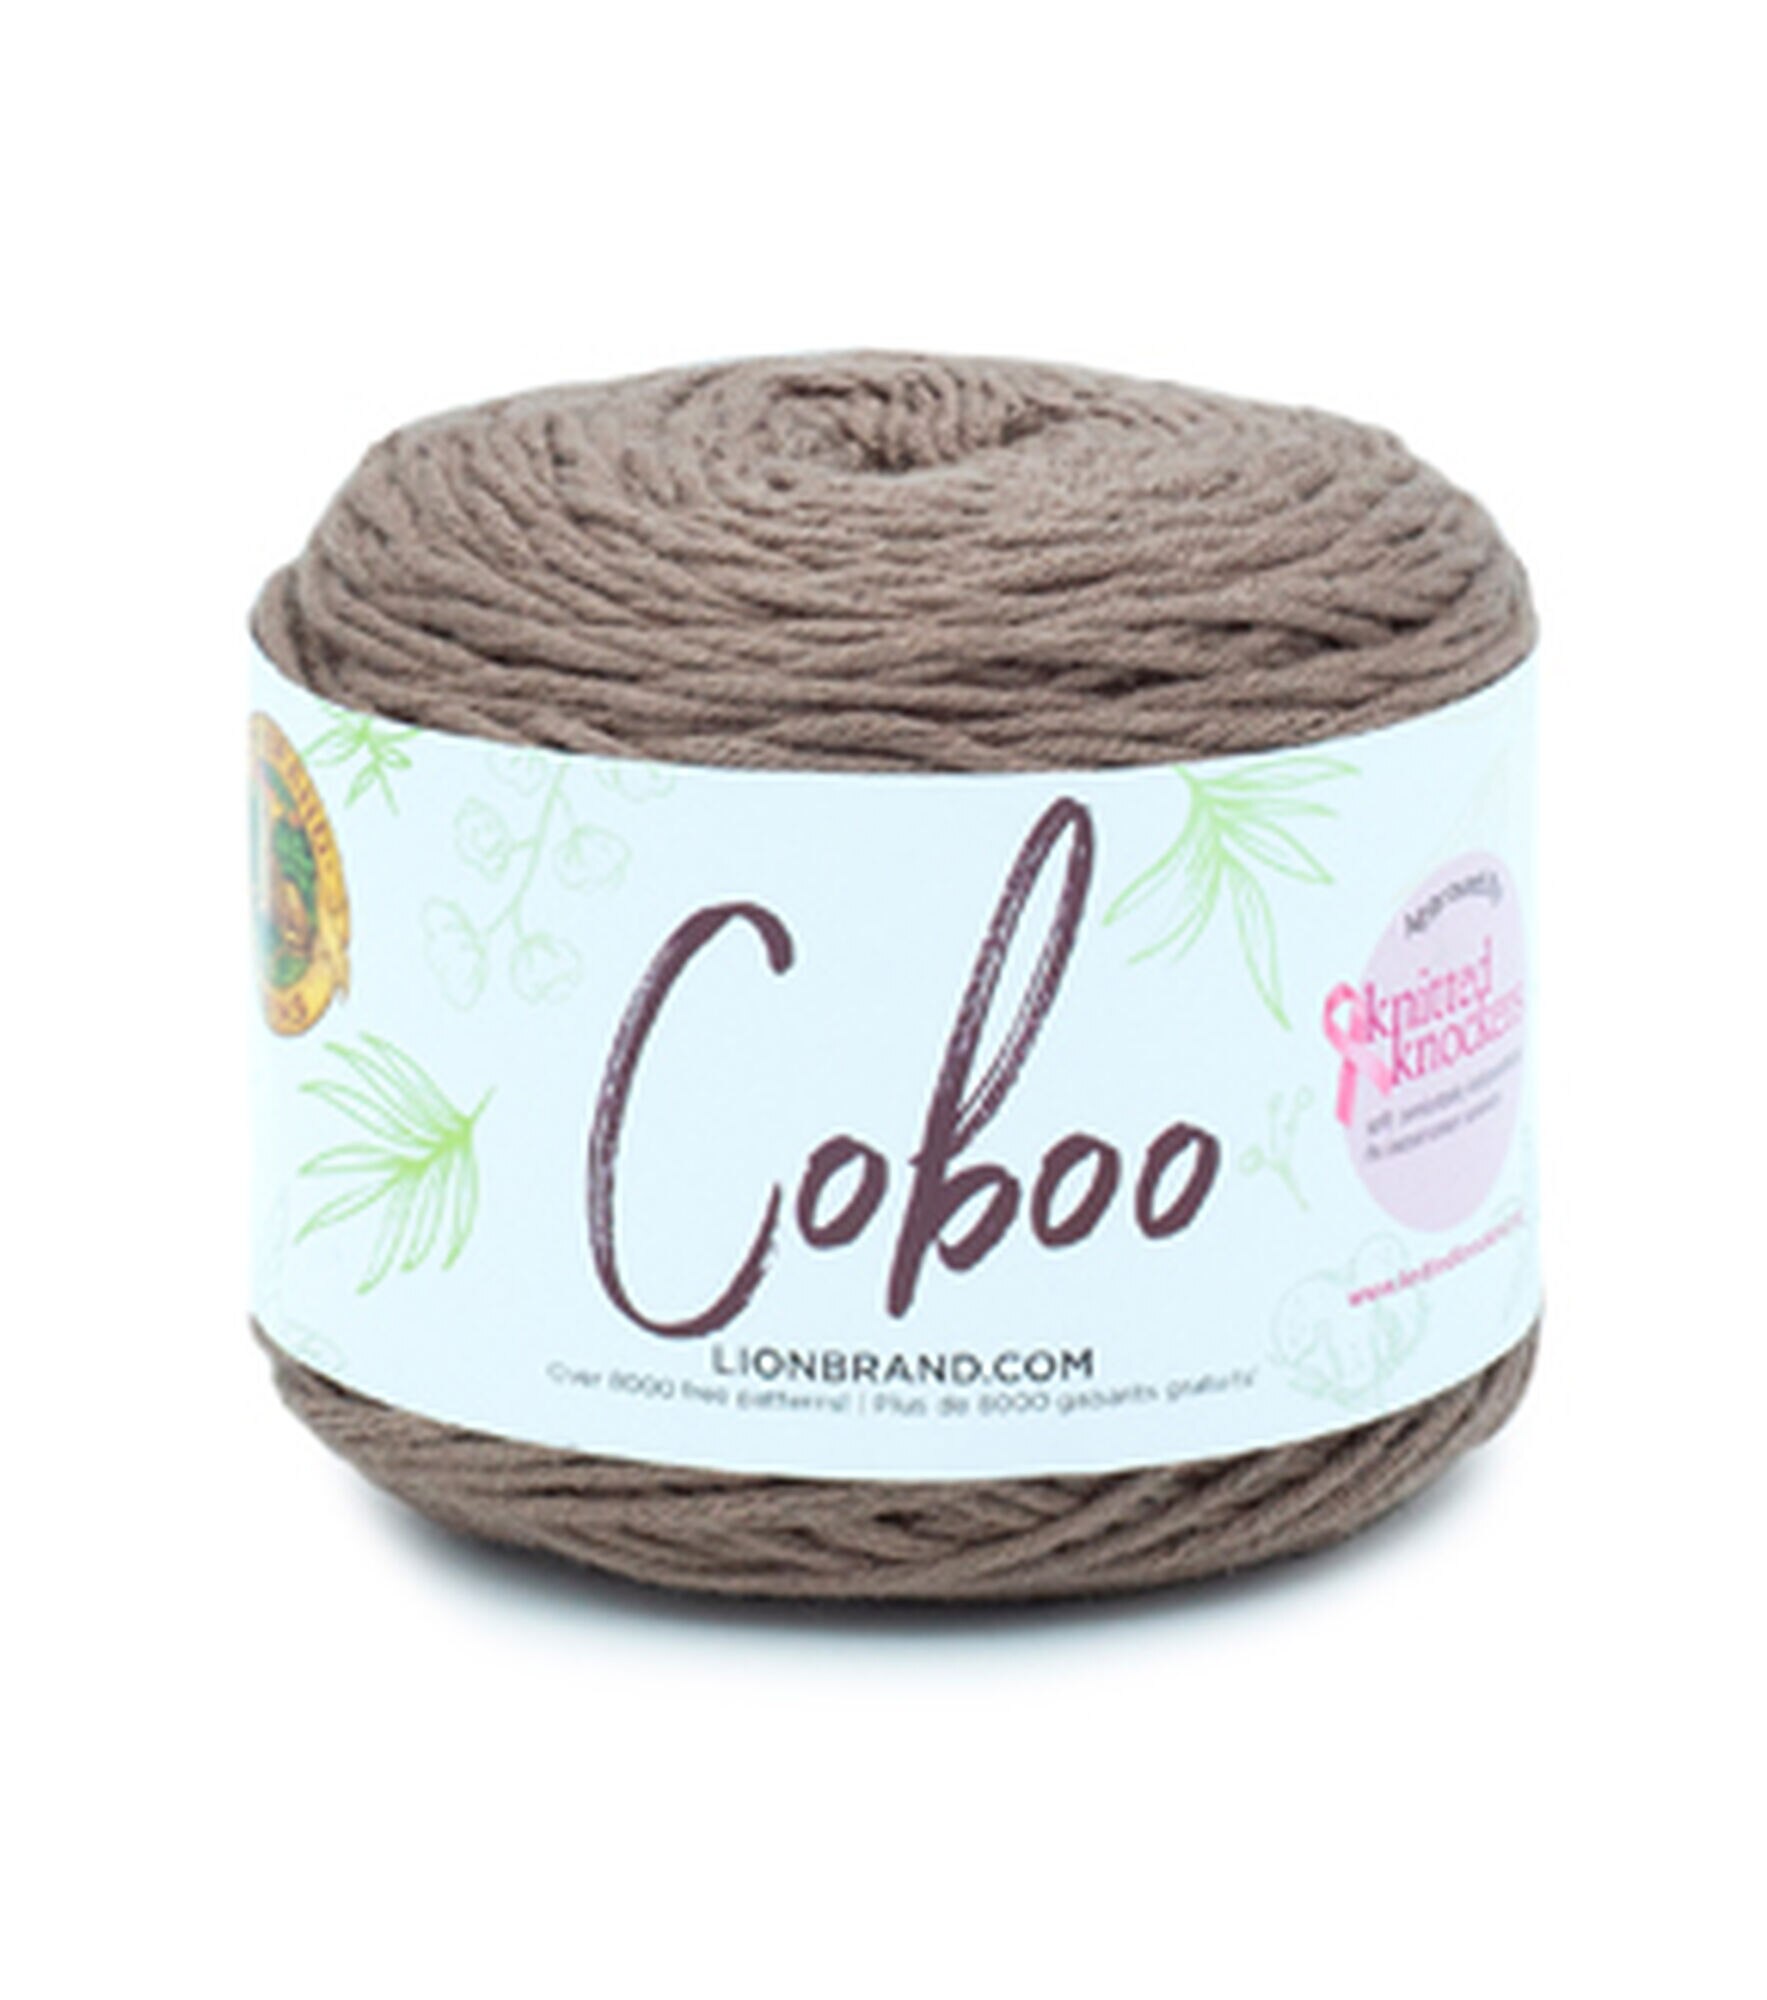 Lion Brand Coboo Natural Fiber Yarn